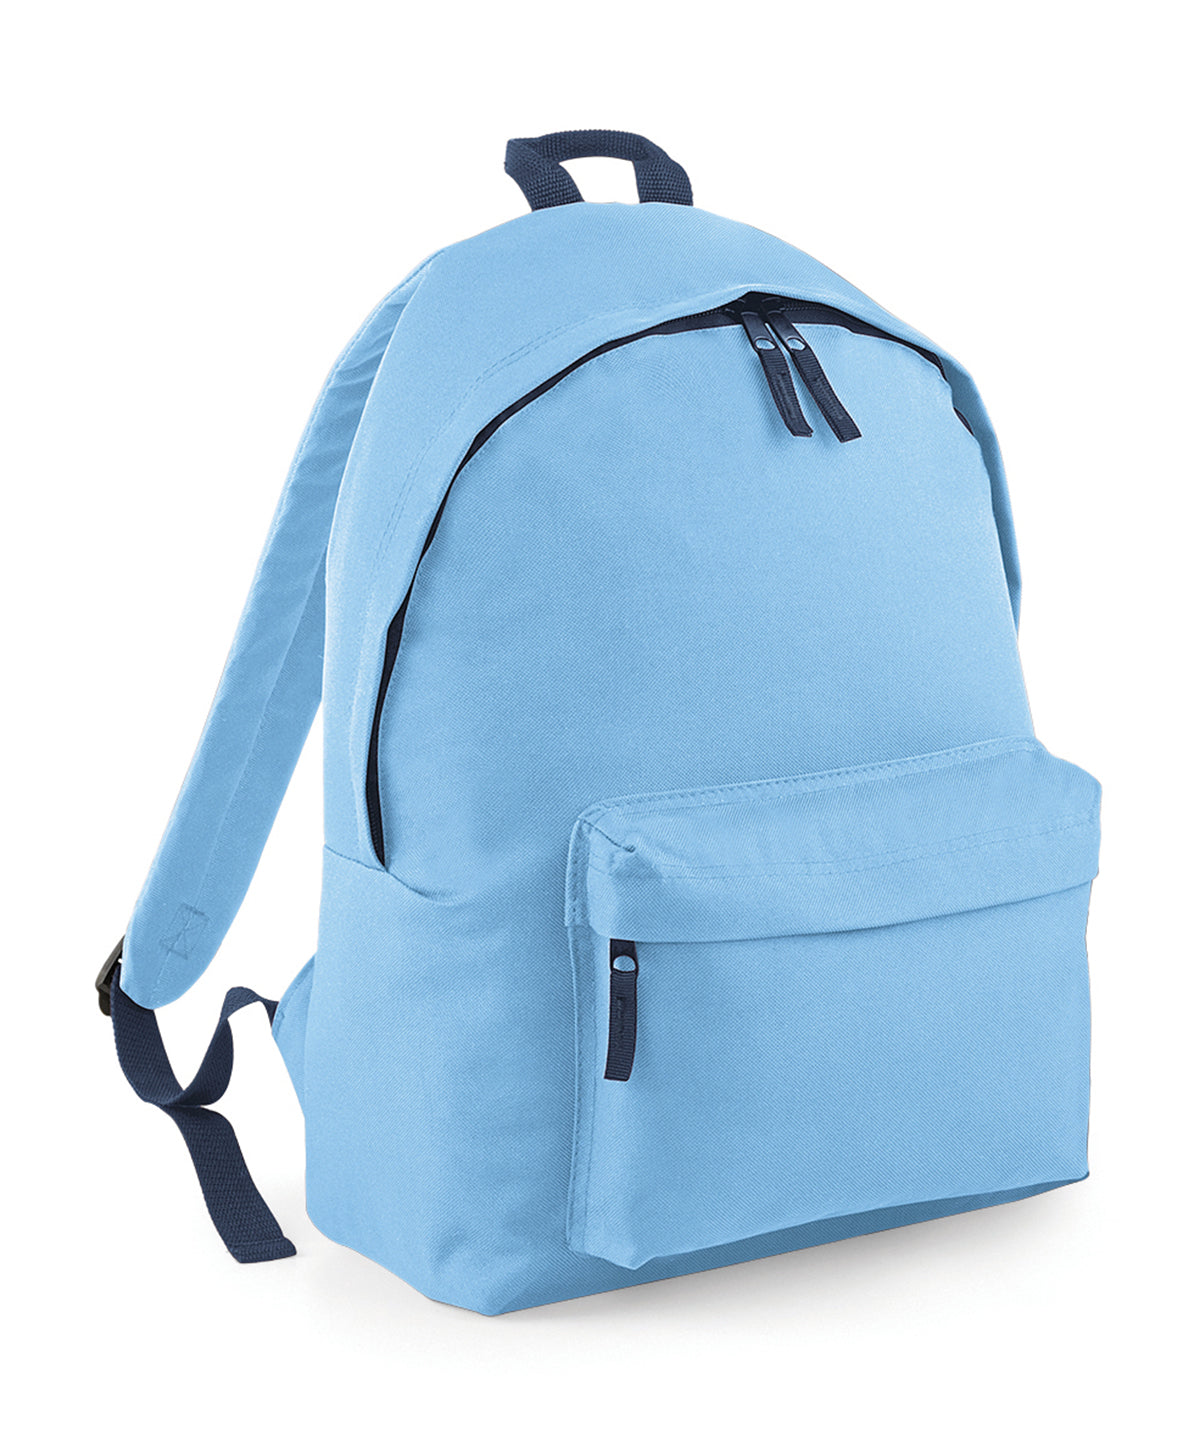 Personalised Bags - Sky Blue Bagbase Original fashion backpack